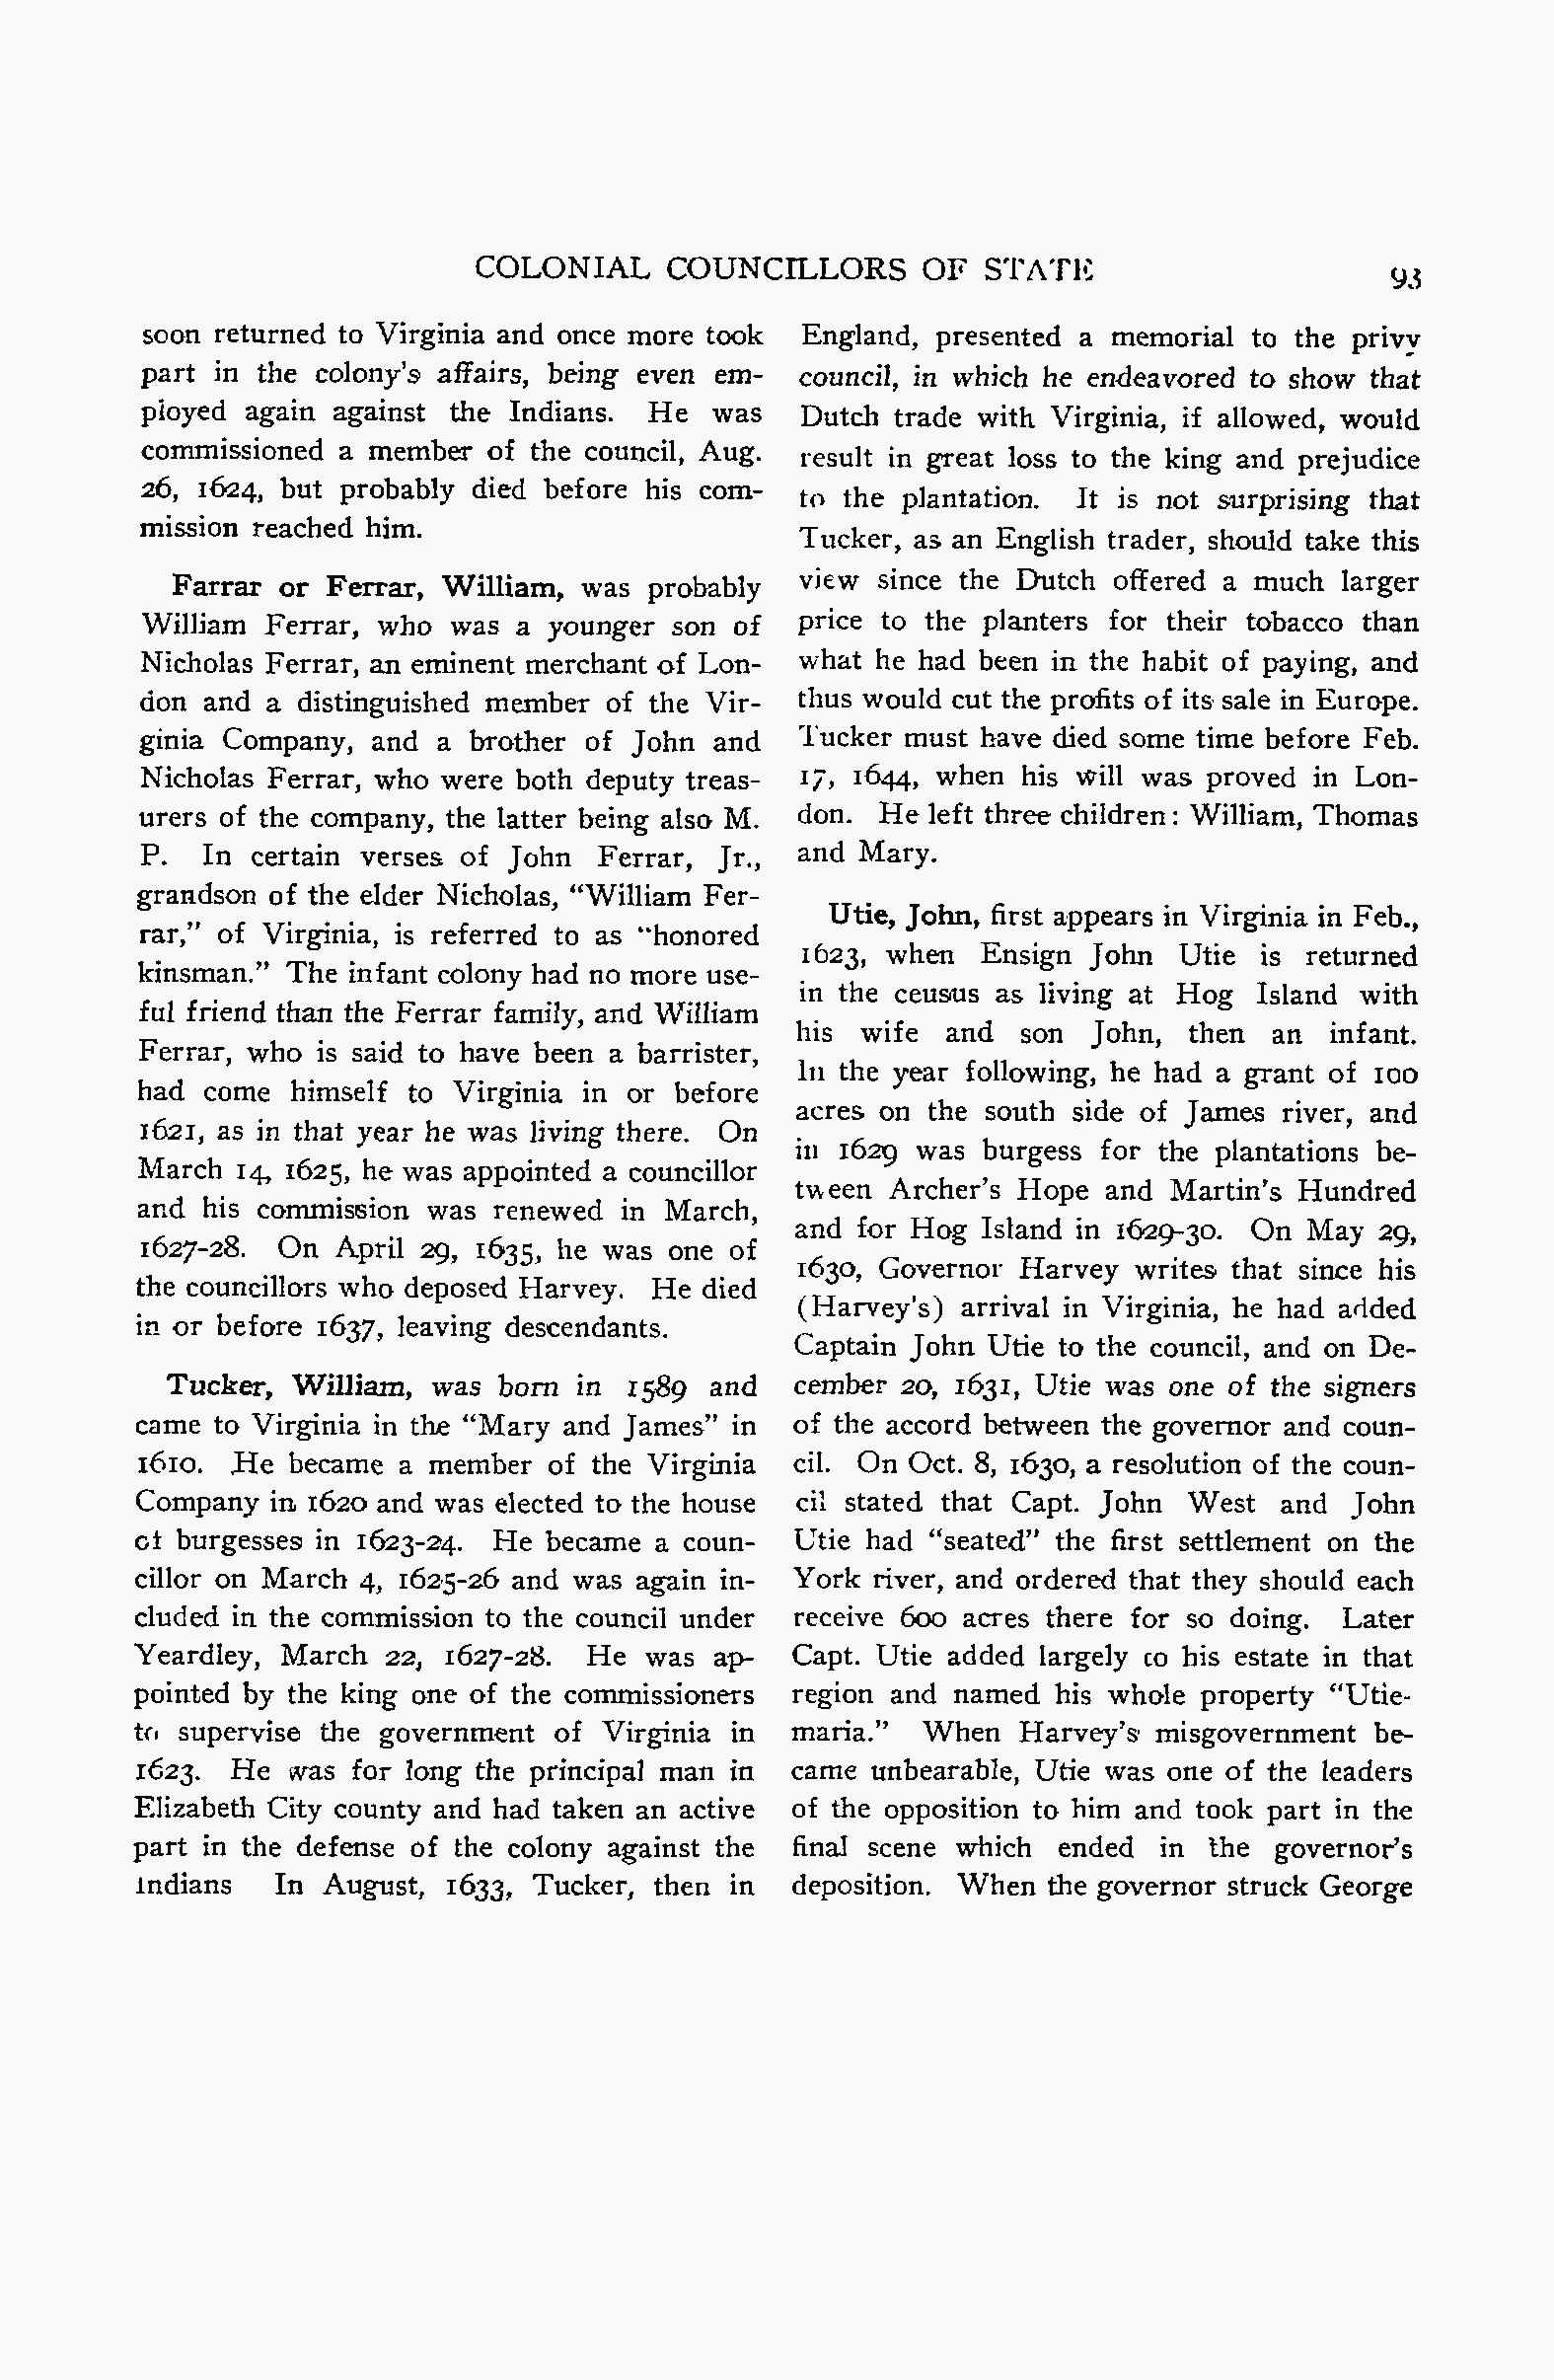 Encyclopedia of Virginia Biography, Vol. I